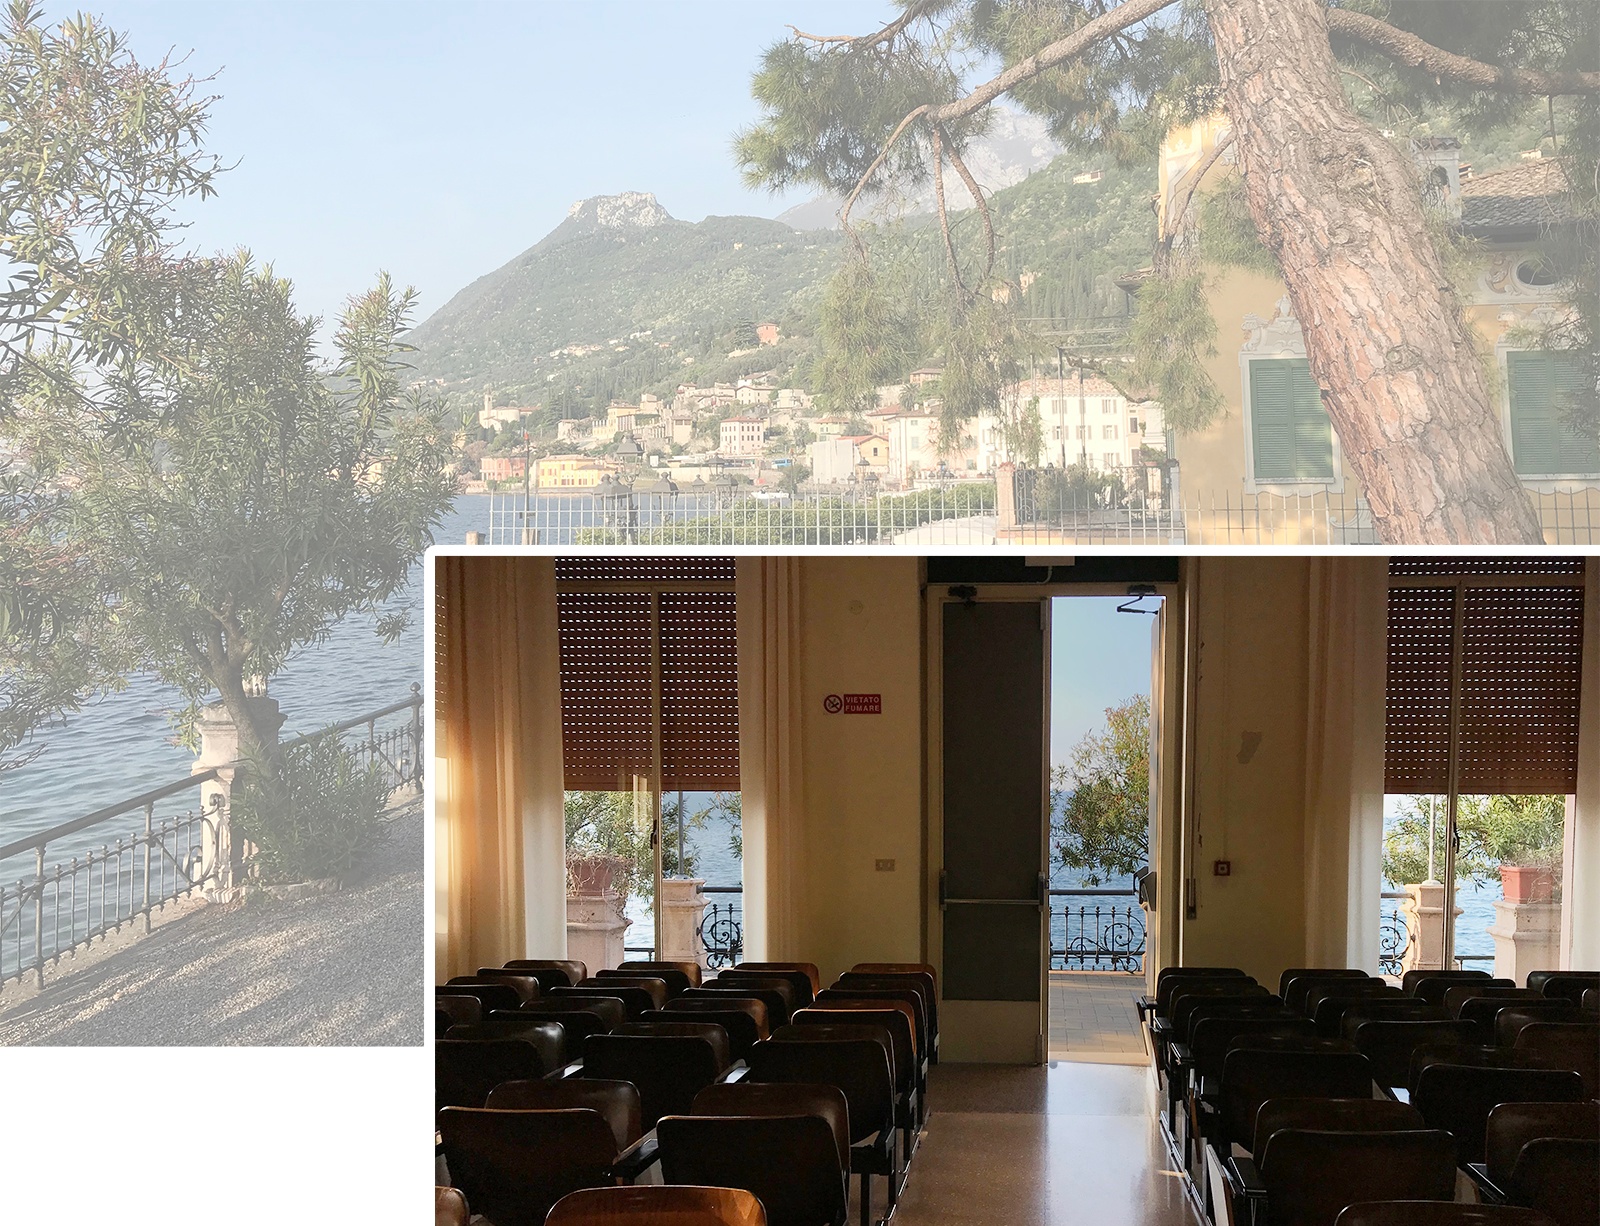 Palazzo Feltrinelli, Lake Garda, Italy - Exaptation Conference 2018